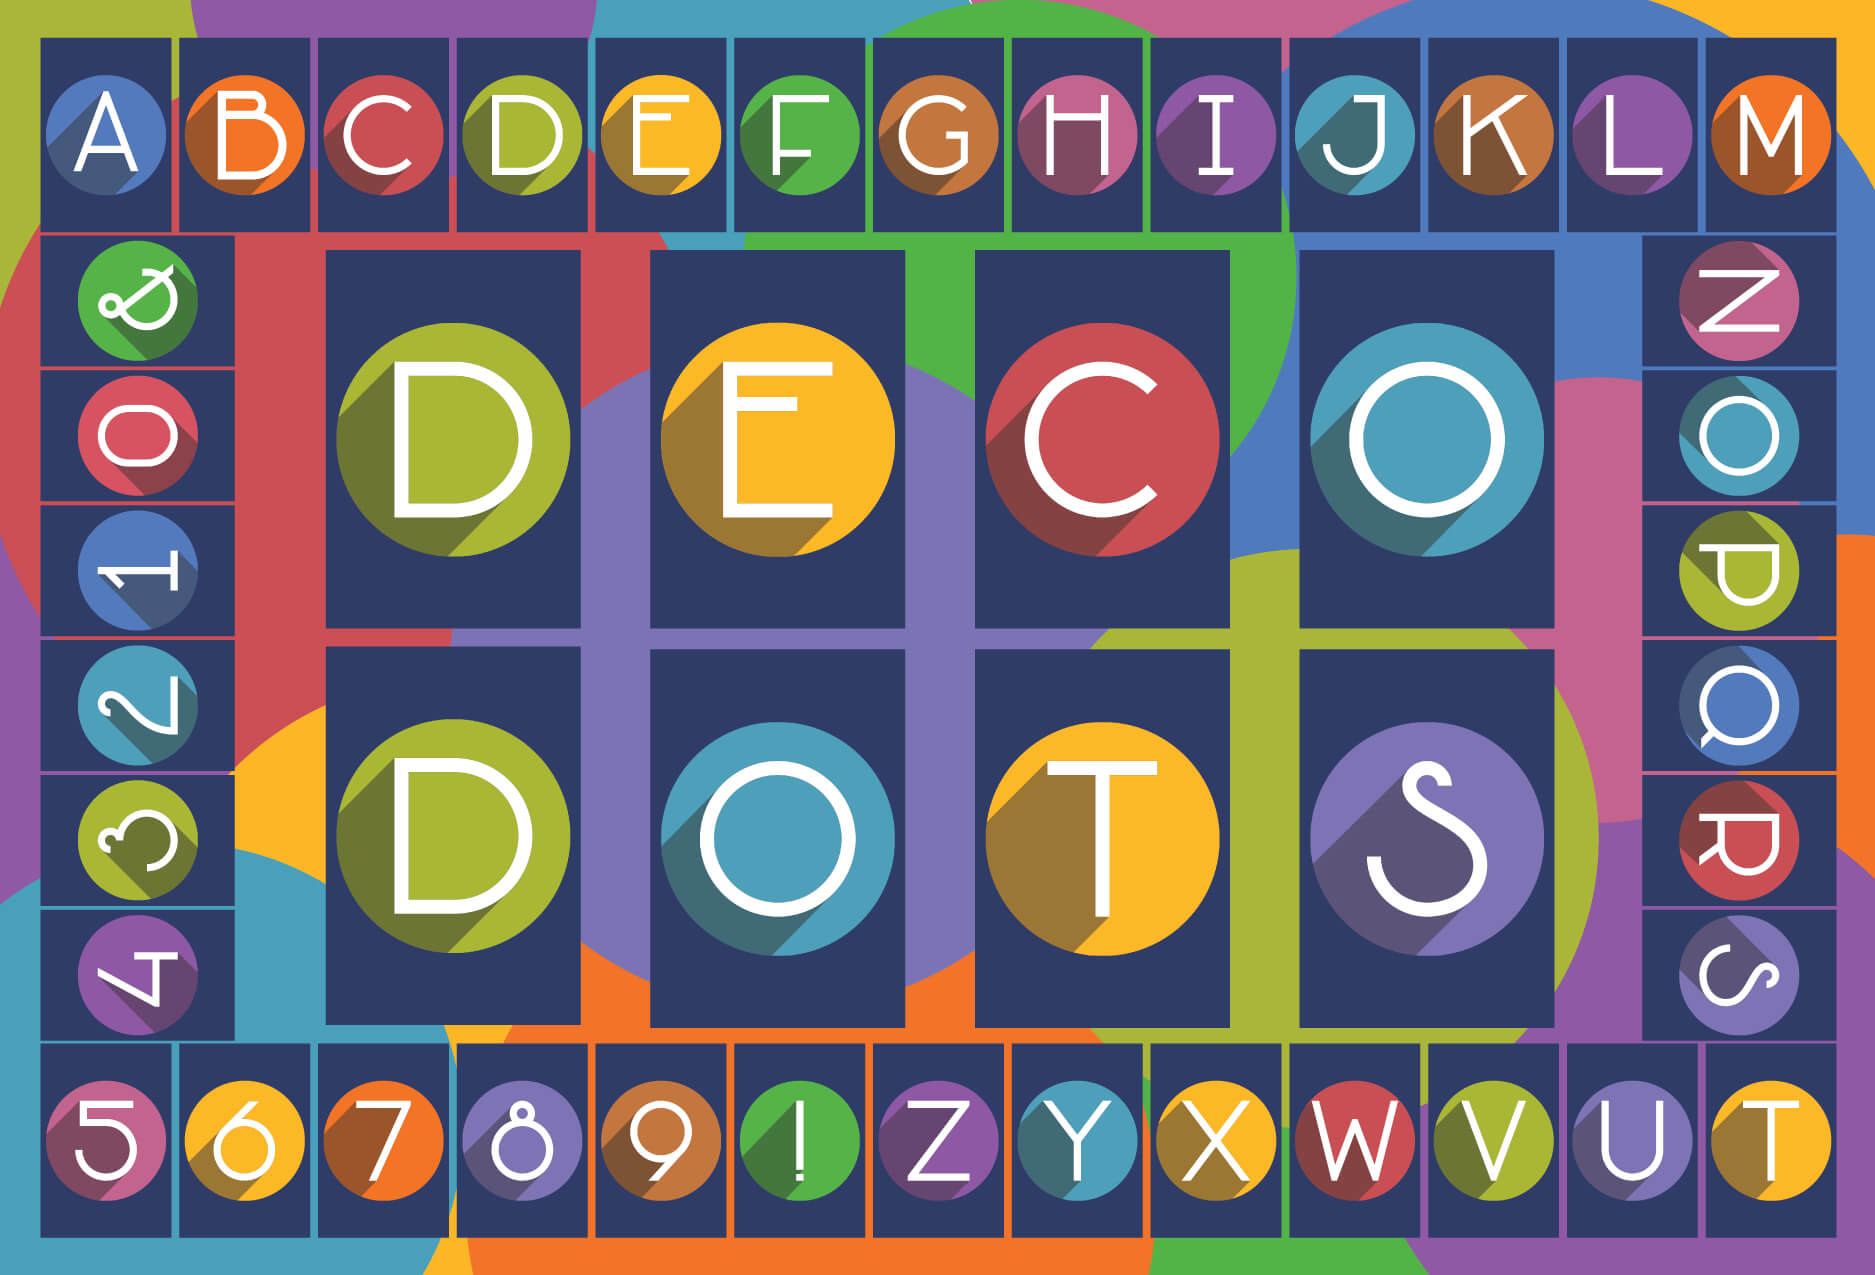 GET WELL SOON! - Deco Dots